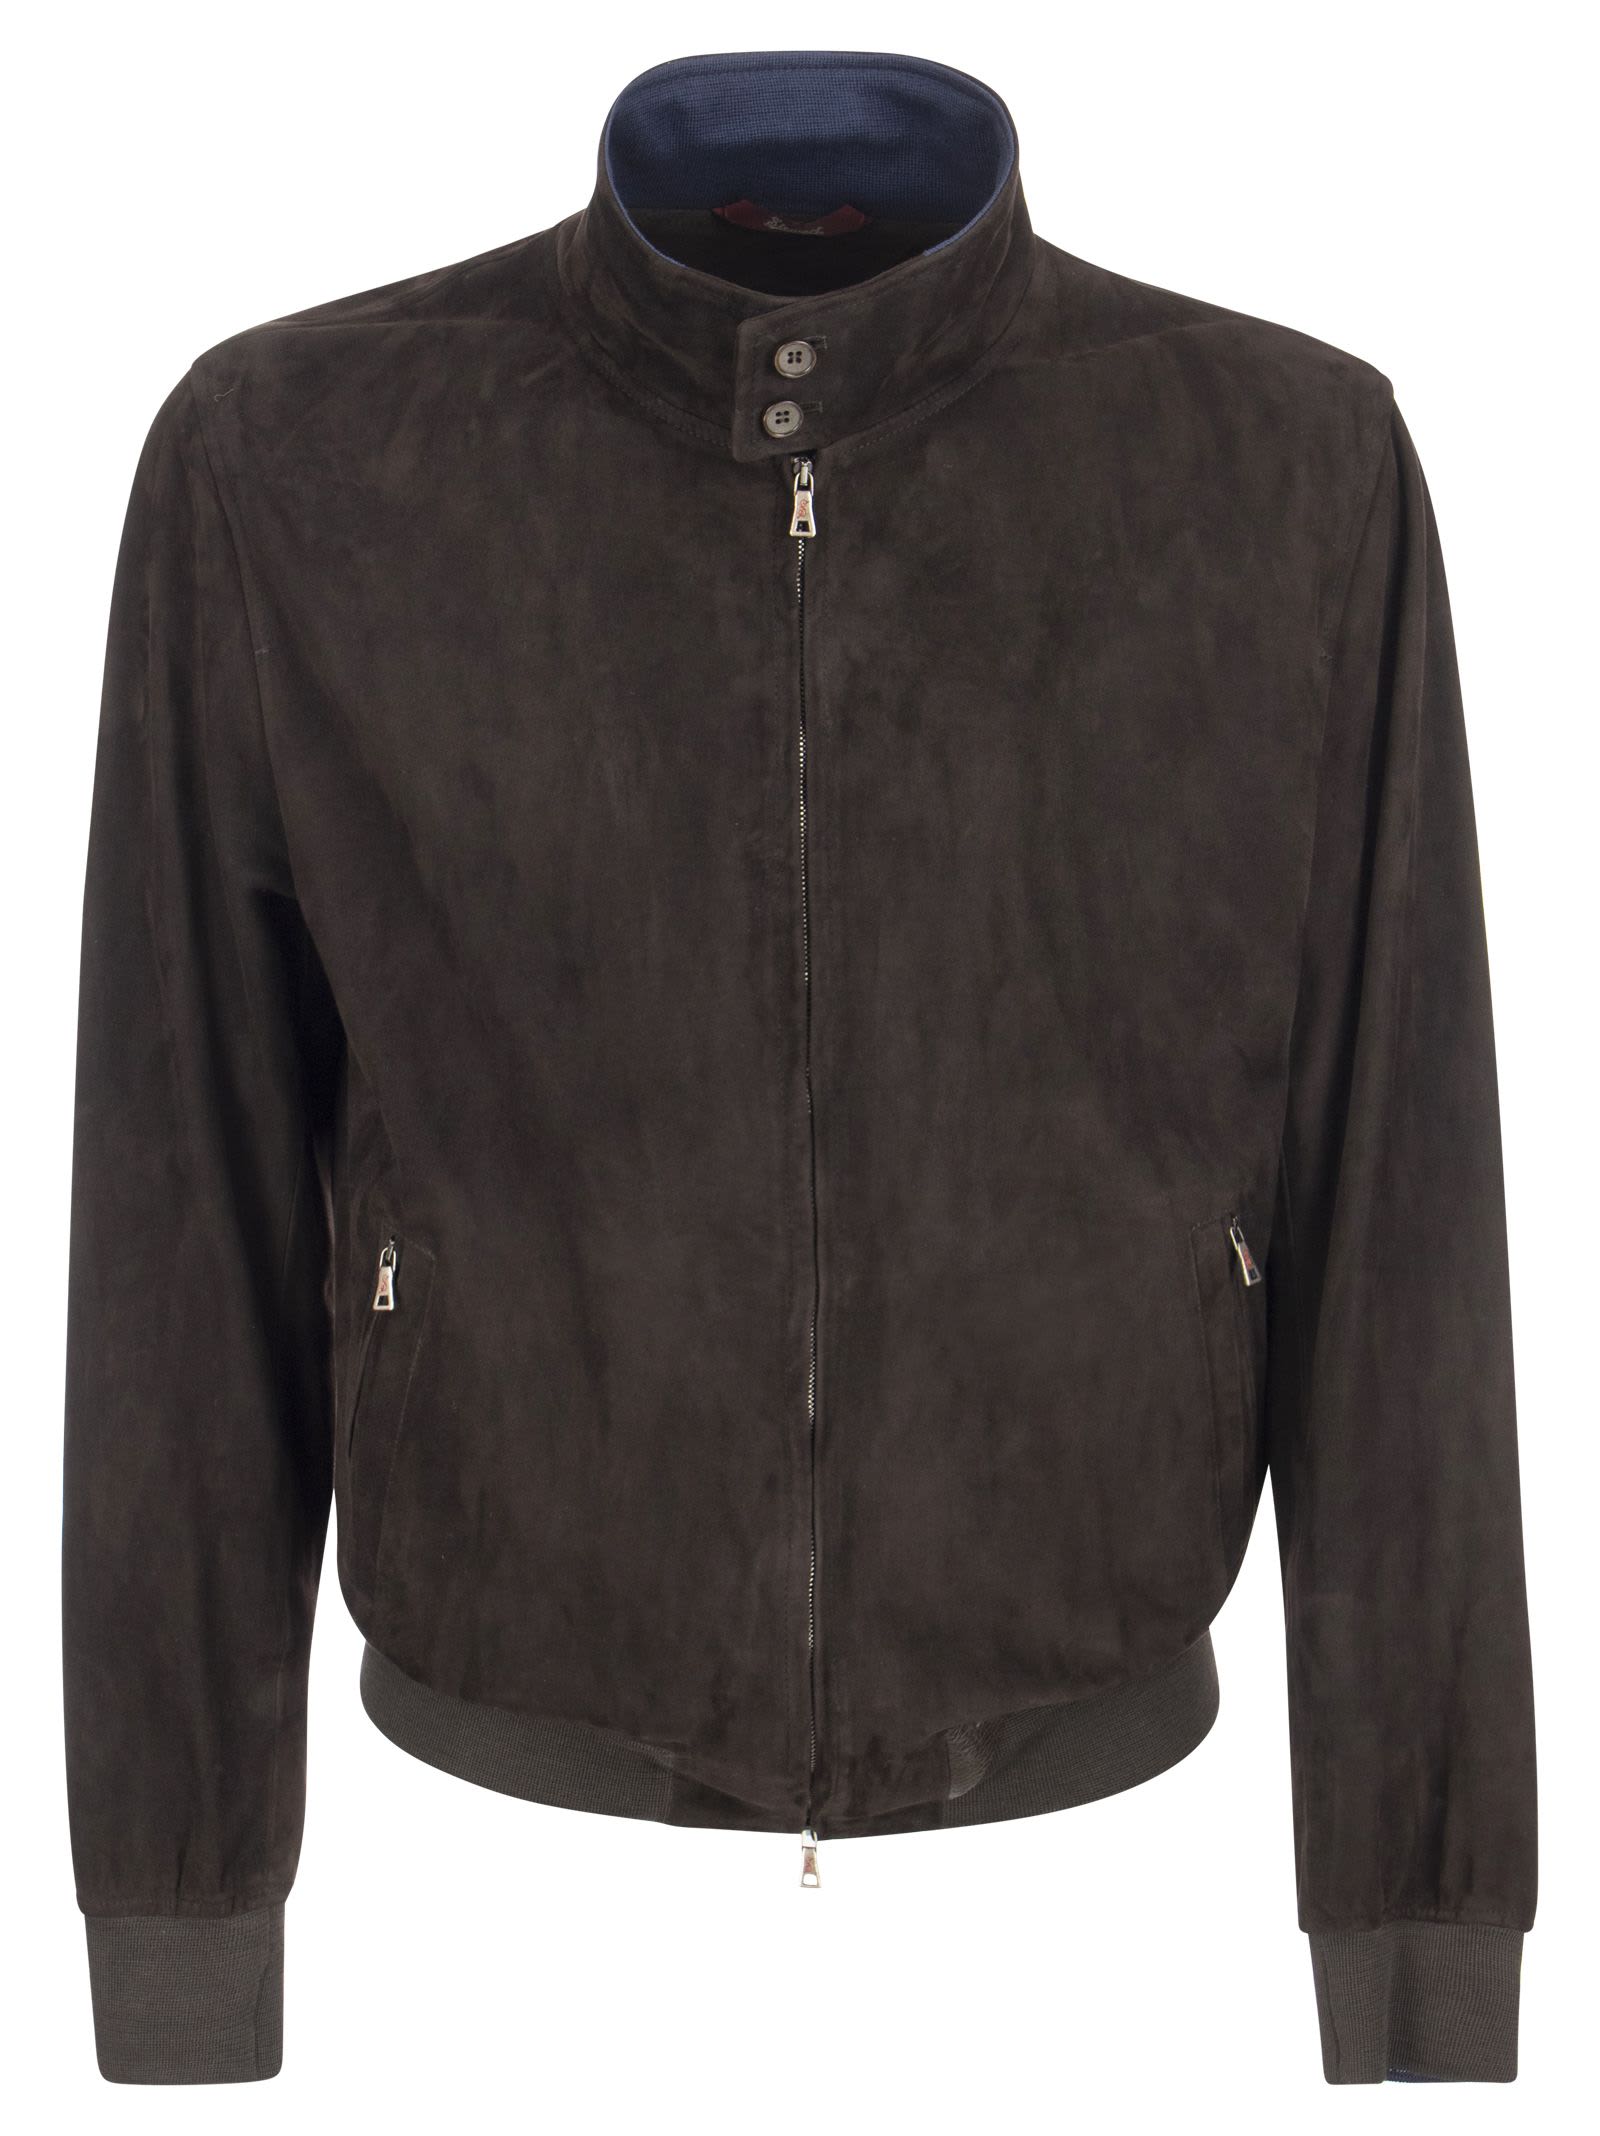 Stewart Boston - Suede Leather Jacket